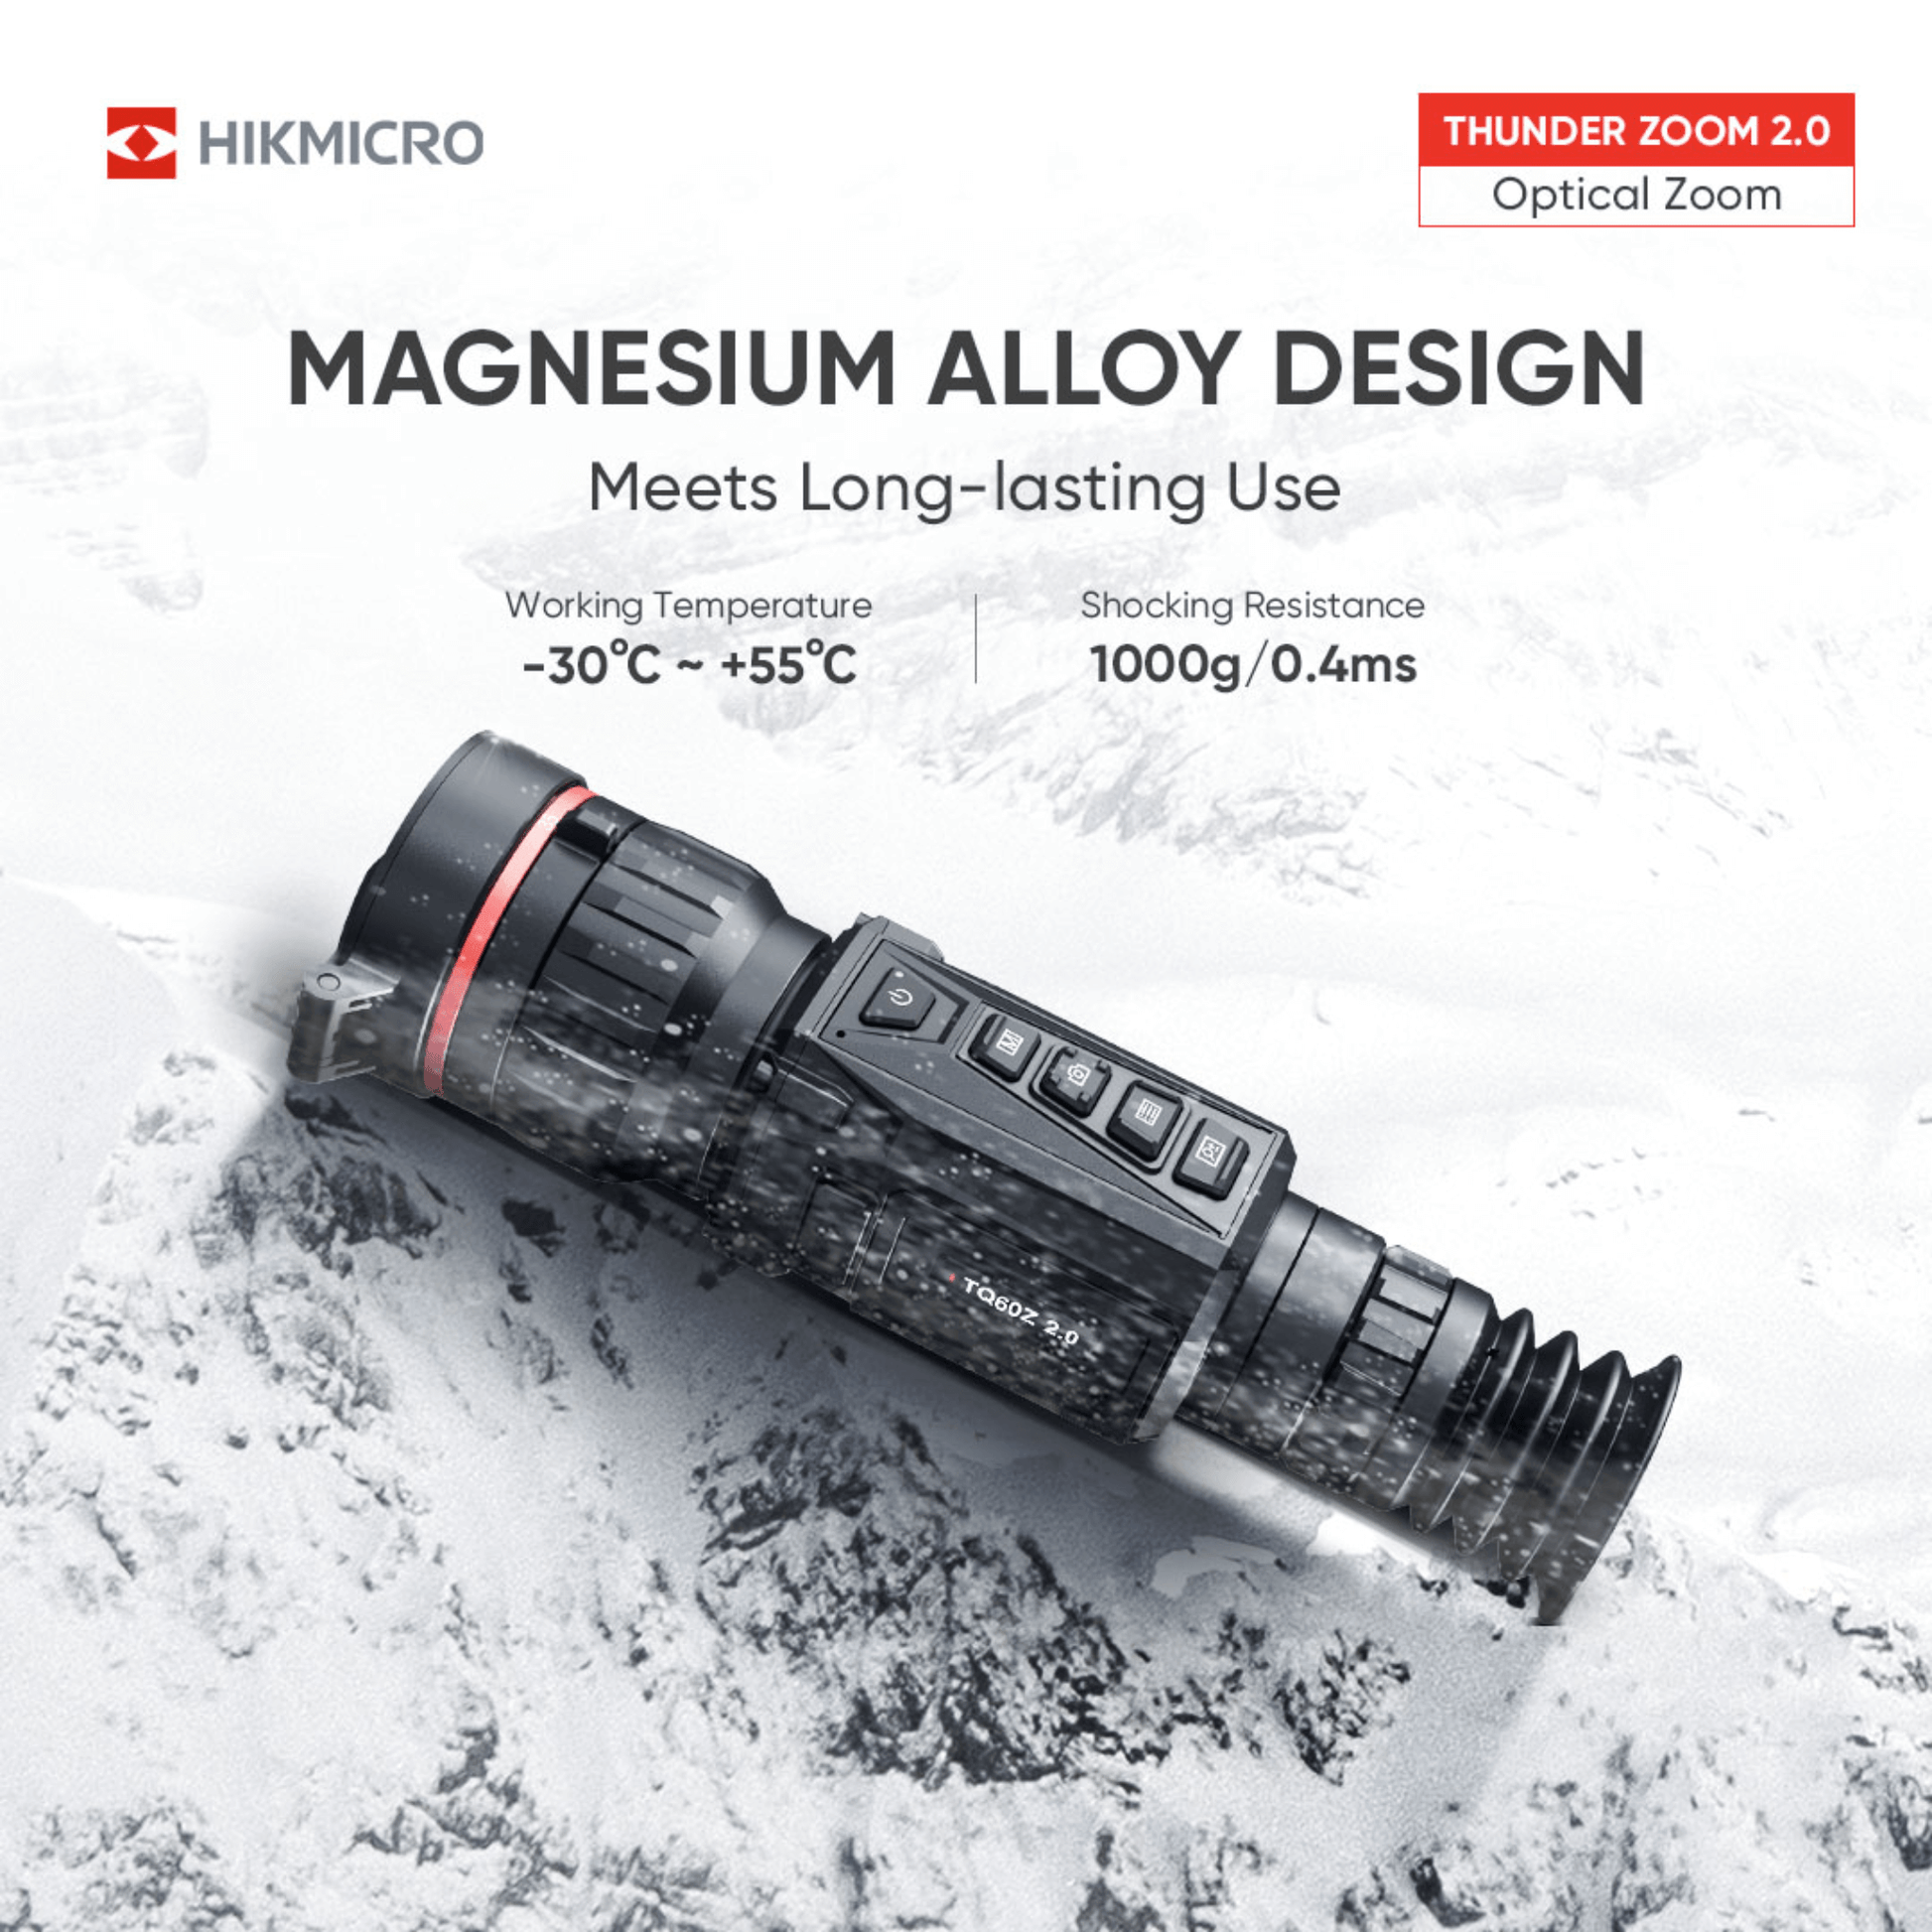 HikMicro Thunder Zoom TQ60Z 2.0 has a magnesium alloy body